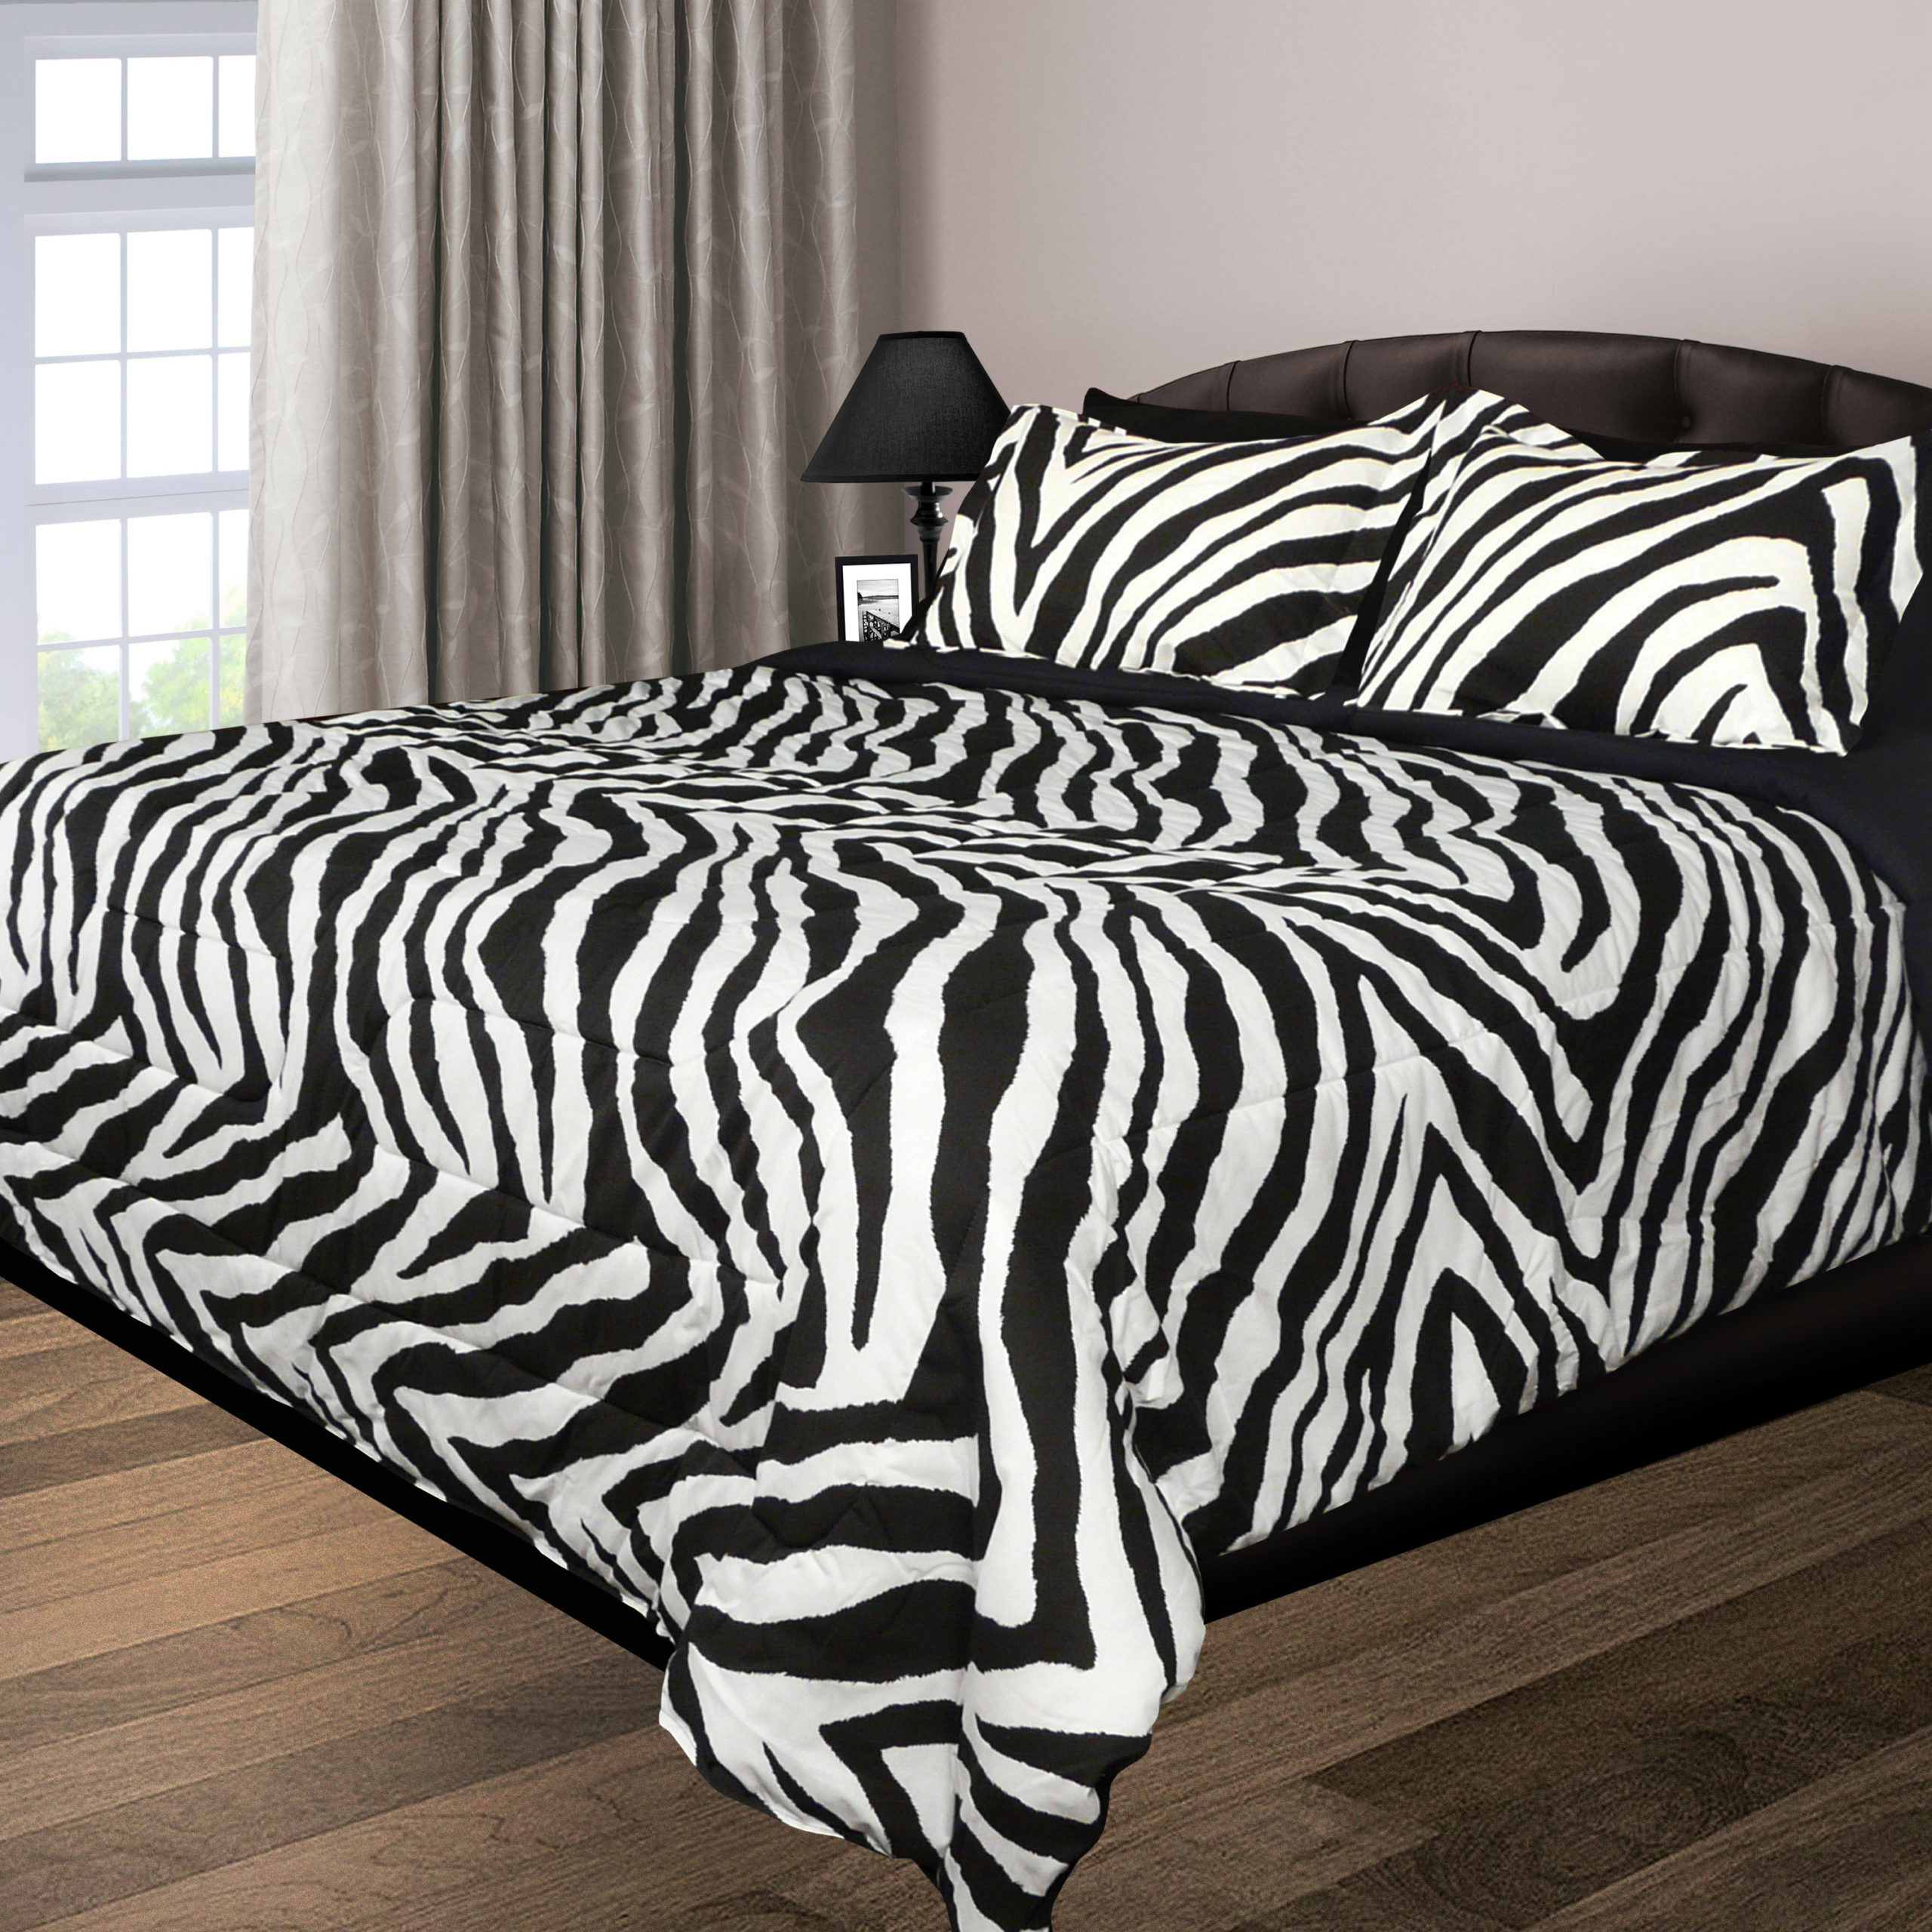 3 Piece Double Stuffed Comforter Set, Zebra Twin Bed In A Bag